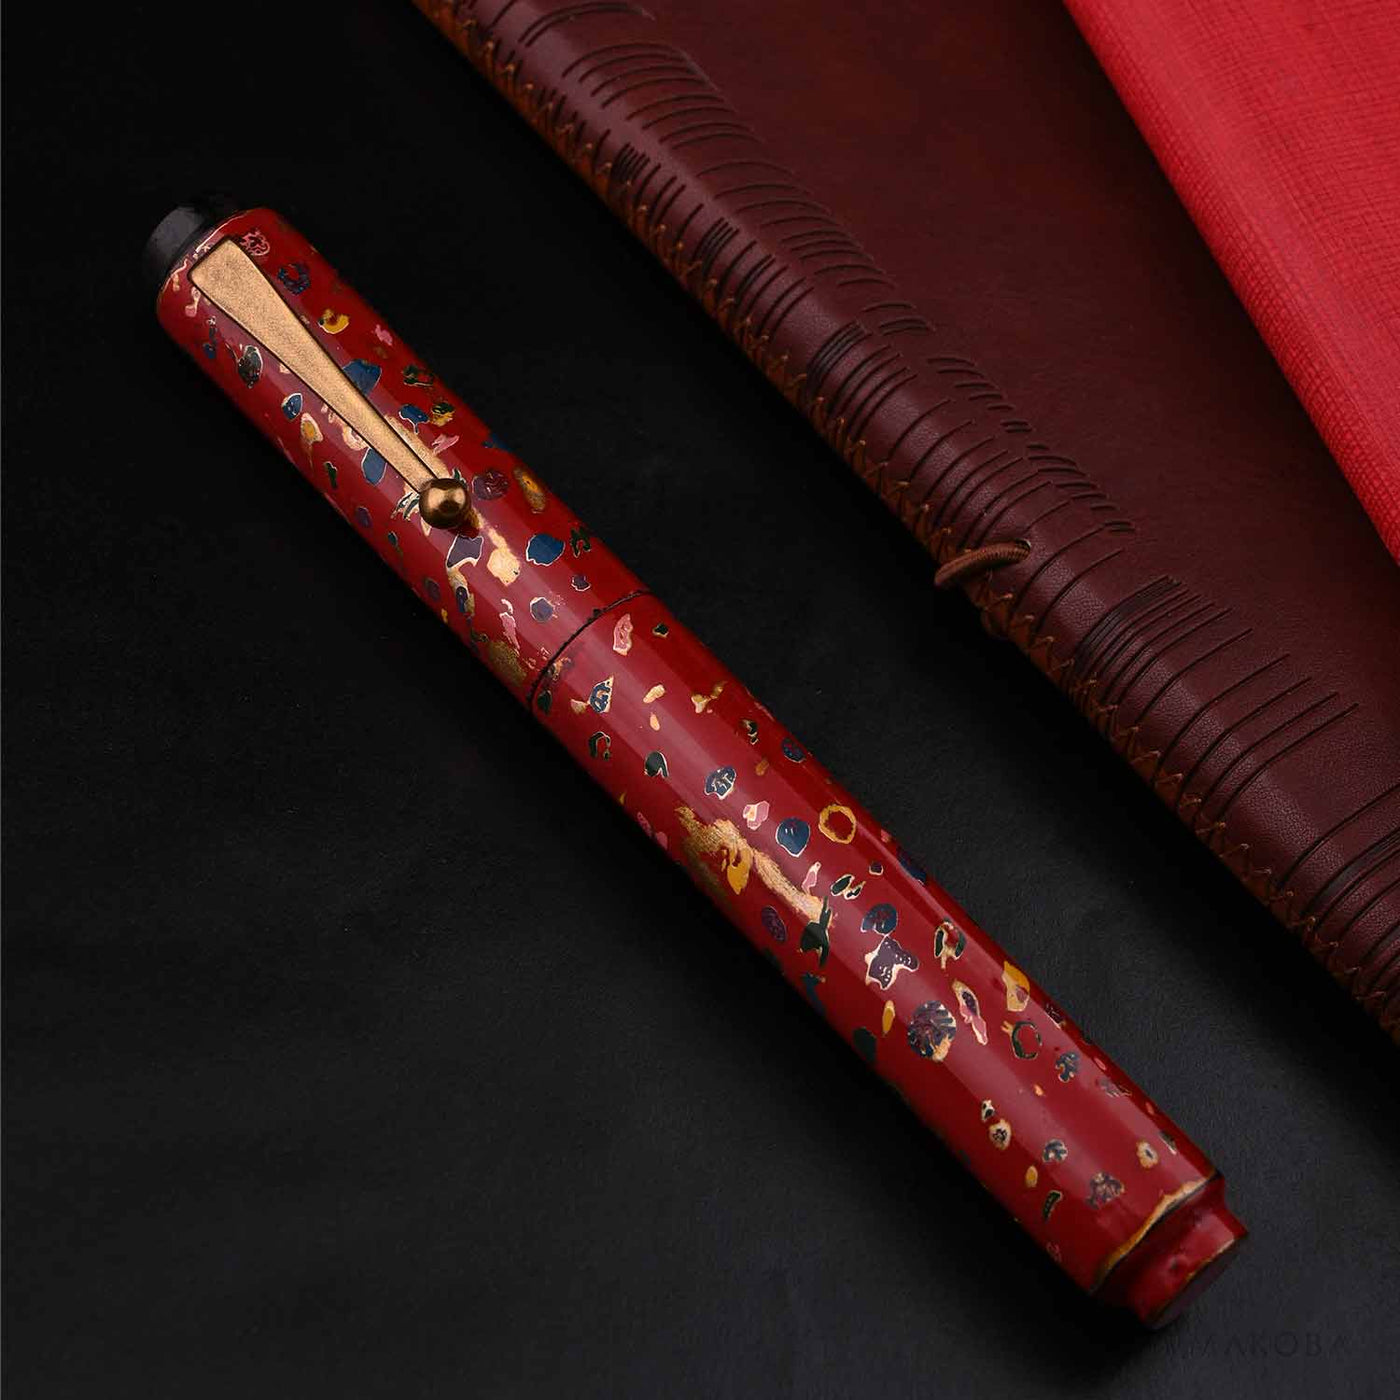 AP Magical Nuri Limited Edition Fountain Pen Red 18K Gold Nib 5